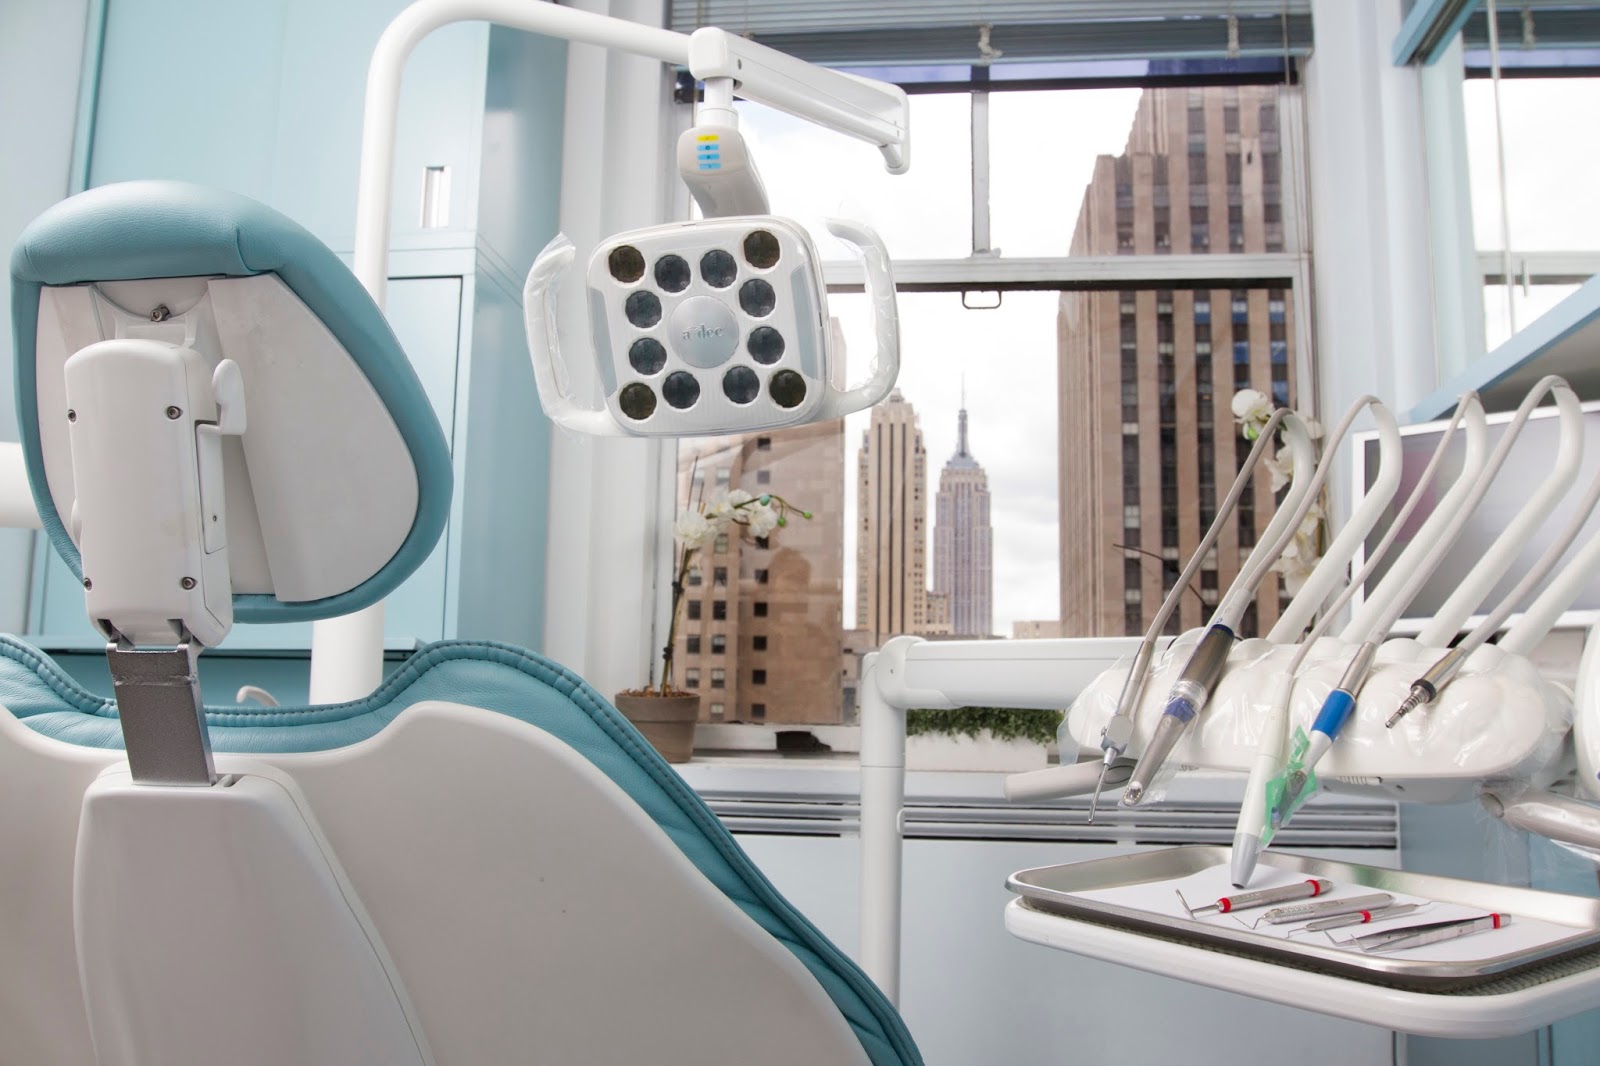 Photo of Preserve Your Teeth - Dentistry - Rockefeller Center - Dr Alice Urbankova in New York City, New York, United States - 2 Picture of Point of interest, Establishment, Health, Dentist